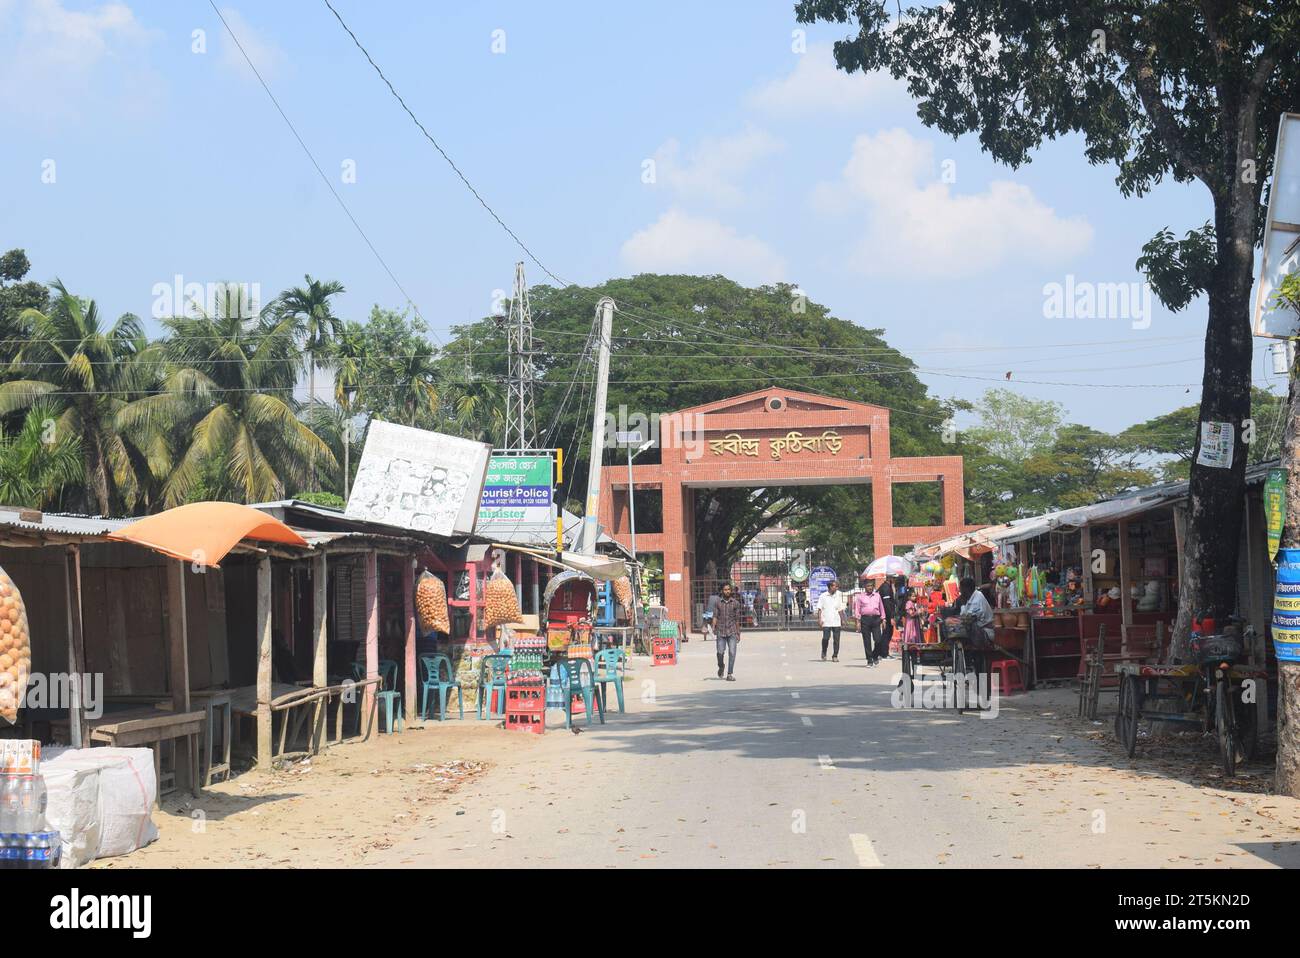 Shilaidaha Rabindra Kuthibari, Kumarkhali area Kushtia, Bangladesh Stock Photo